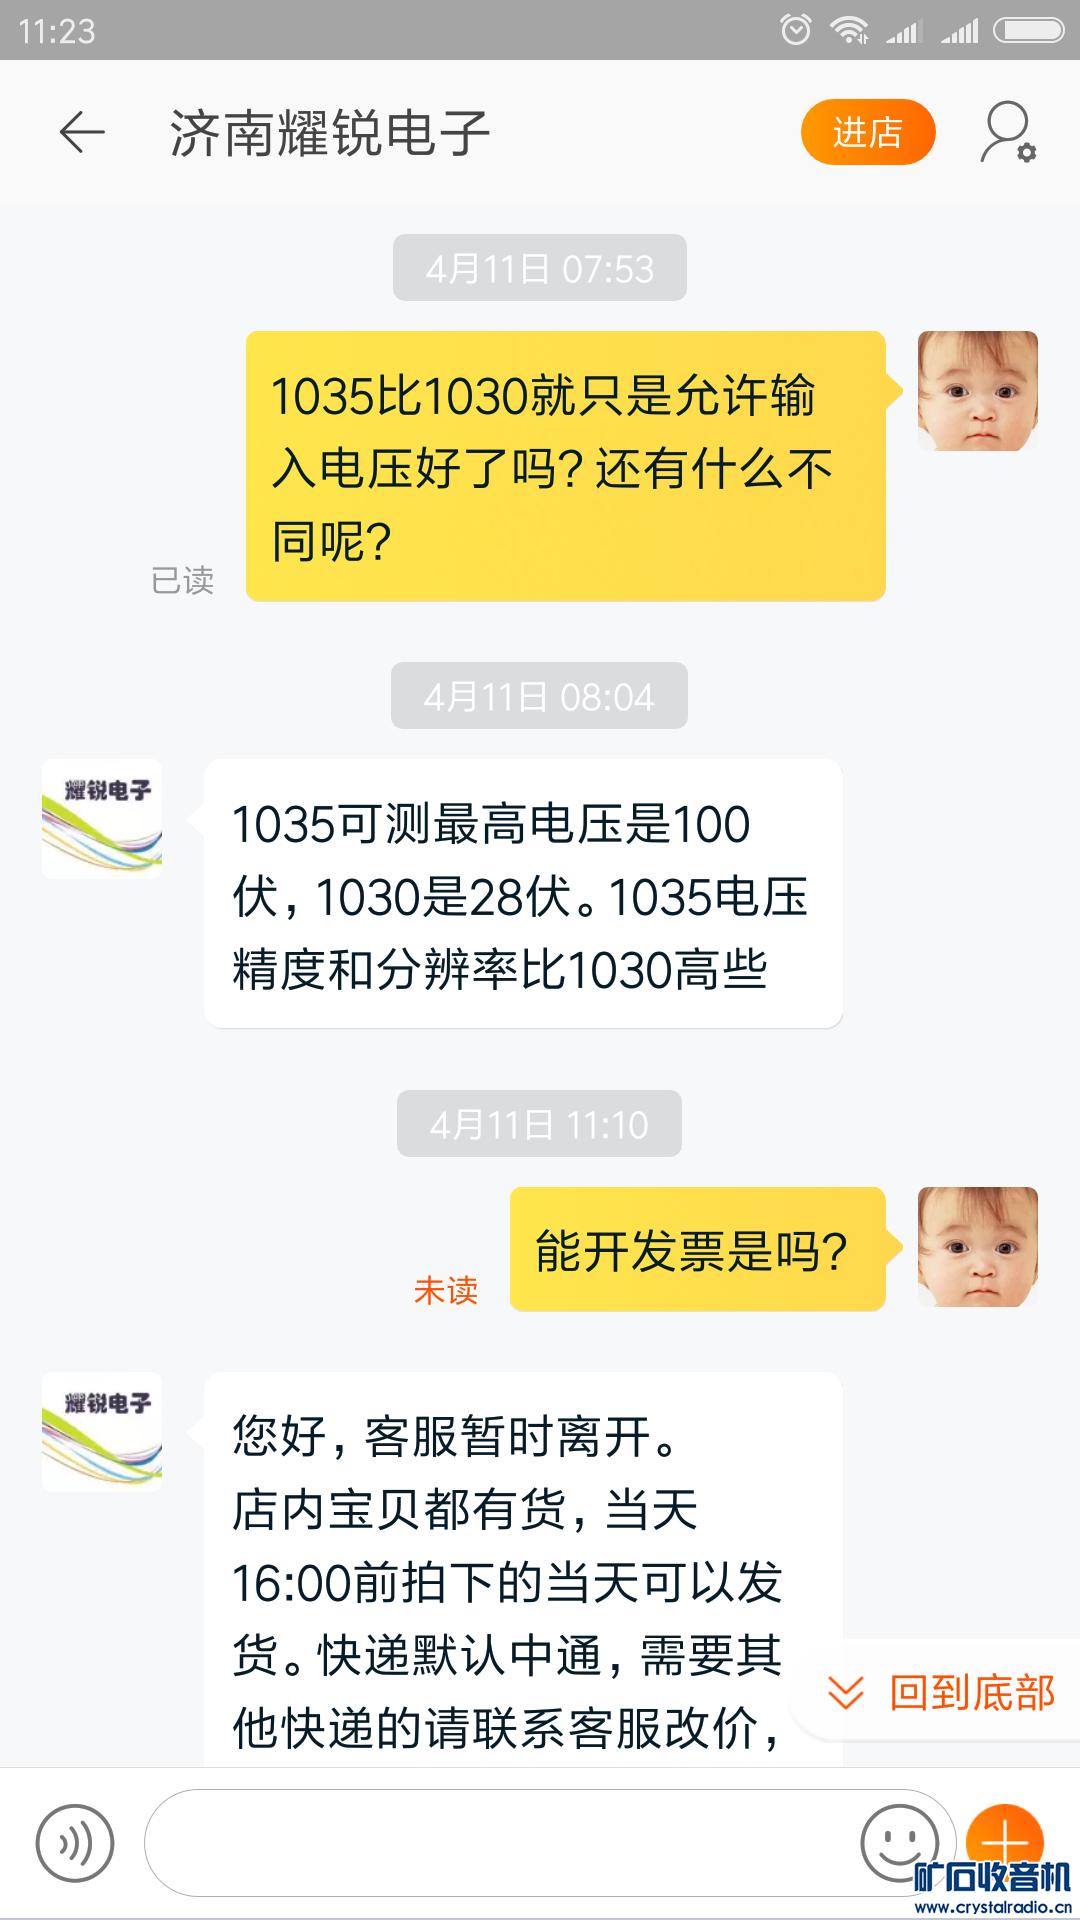 Screenshot_2018-04-14-11-23-11-152_com.taobao.taobao.png